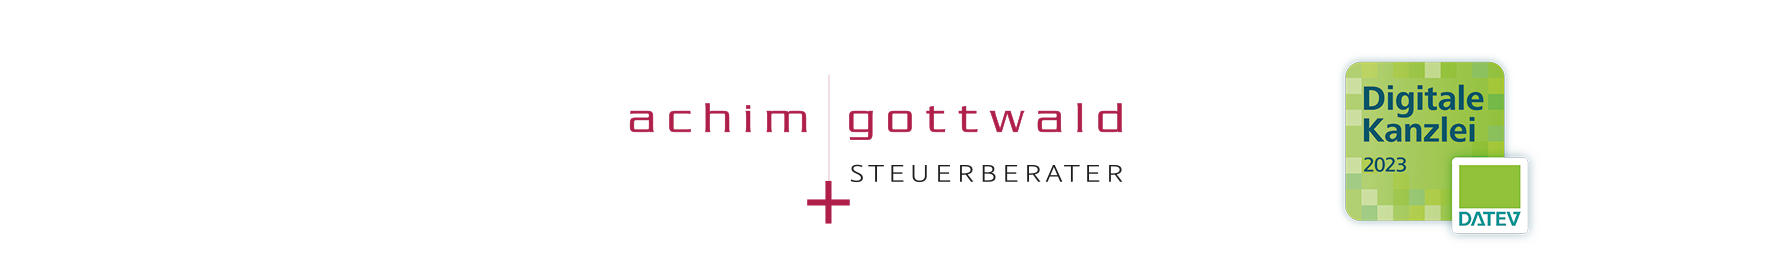 Logo Digitale Kanzlei, Achim Gottwald Steuerberater